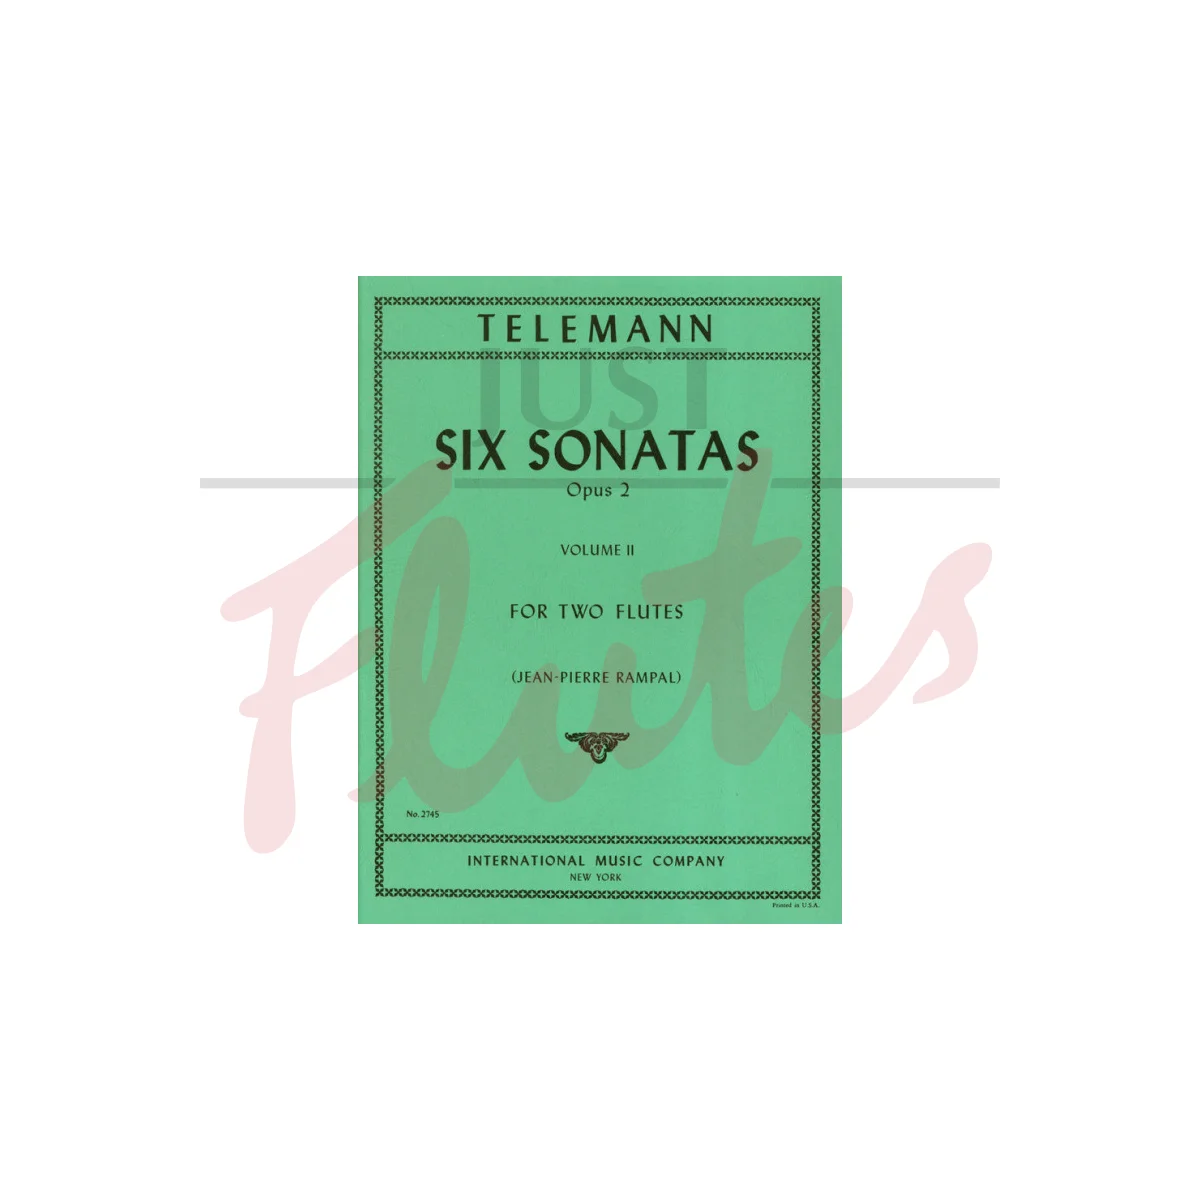 Six Sonatas for Two Flutes, Vol. 2